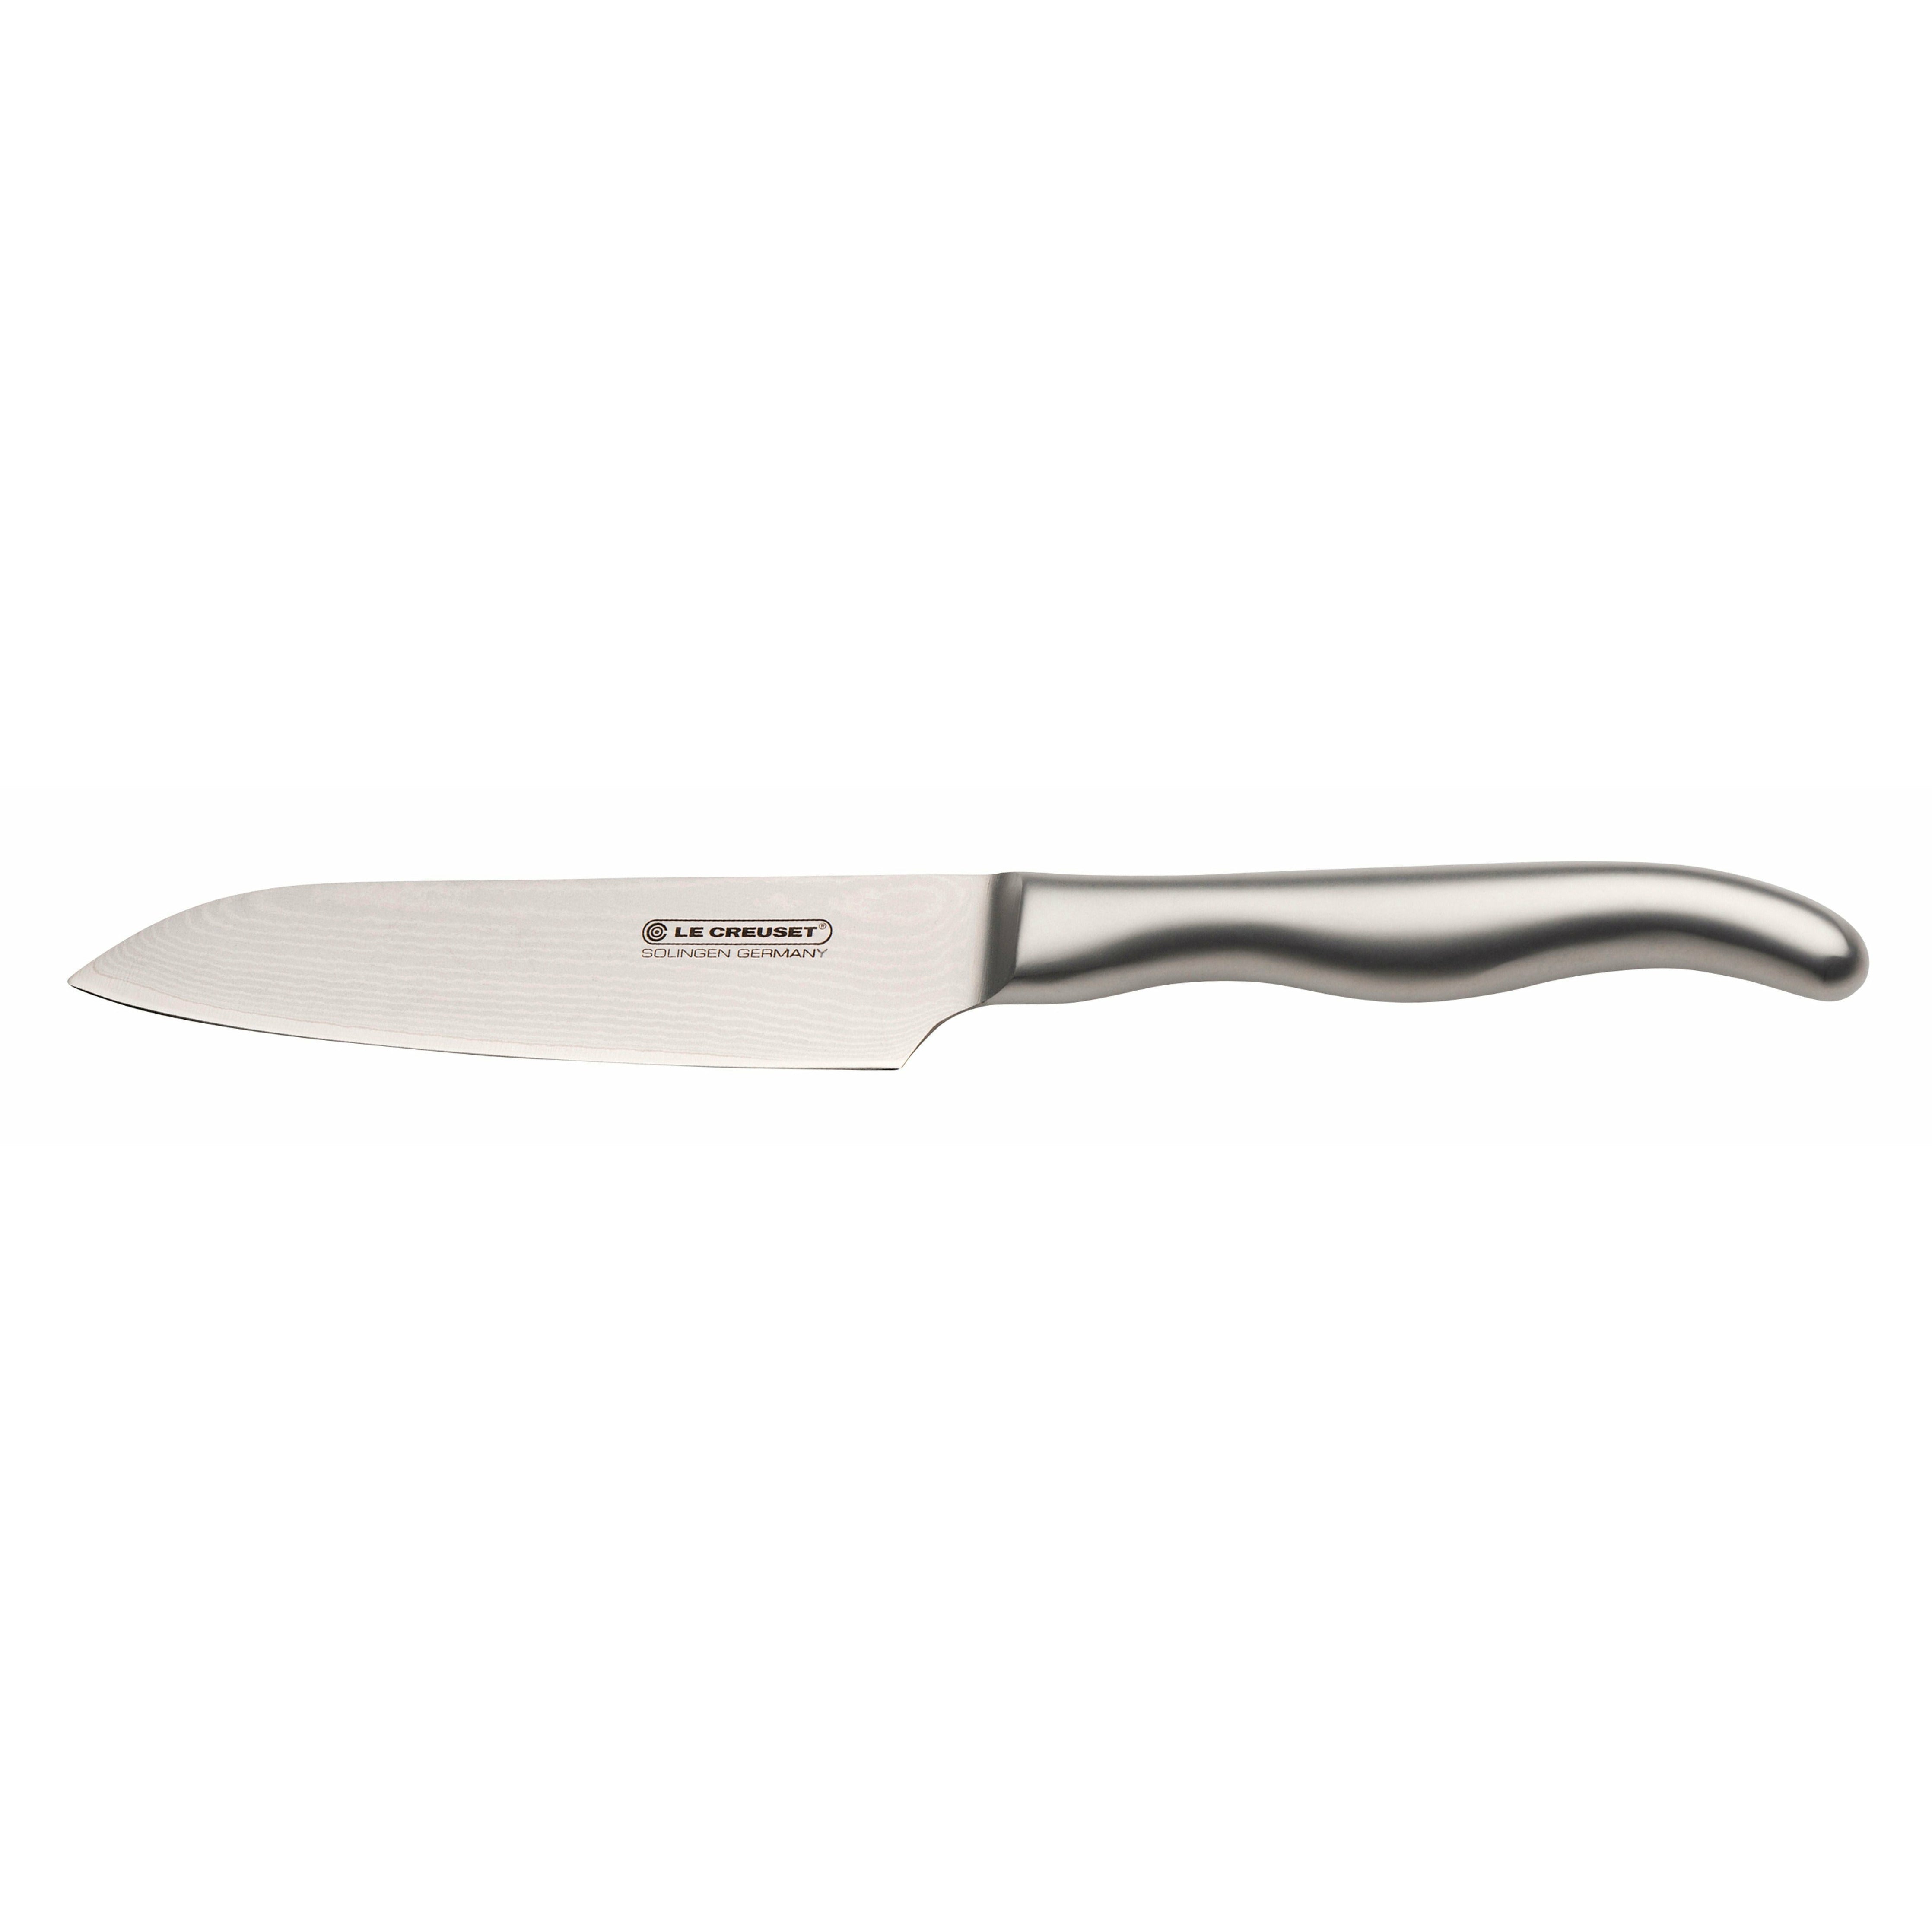 Le Creuset Santoku Knife Stainless Steel Handle, 13 Cm